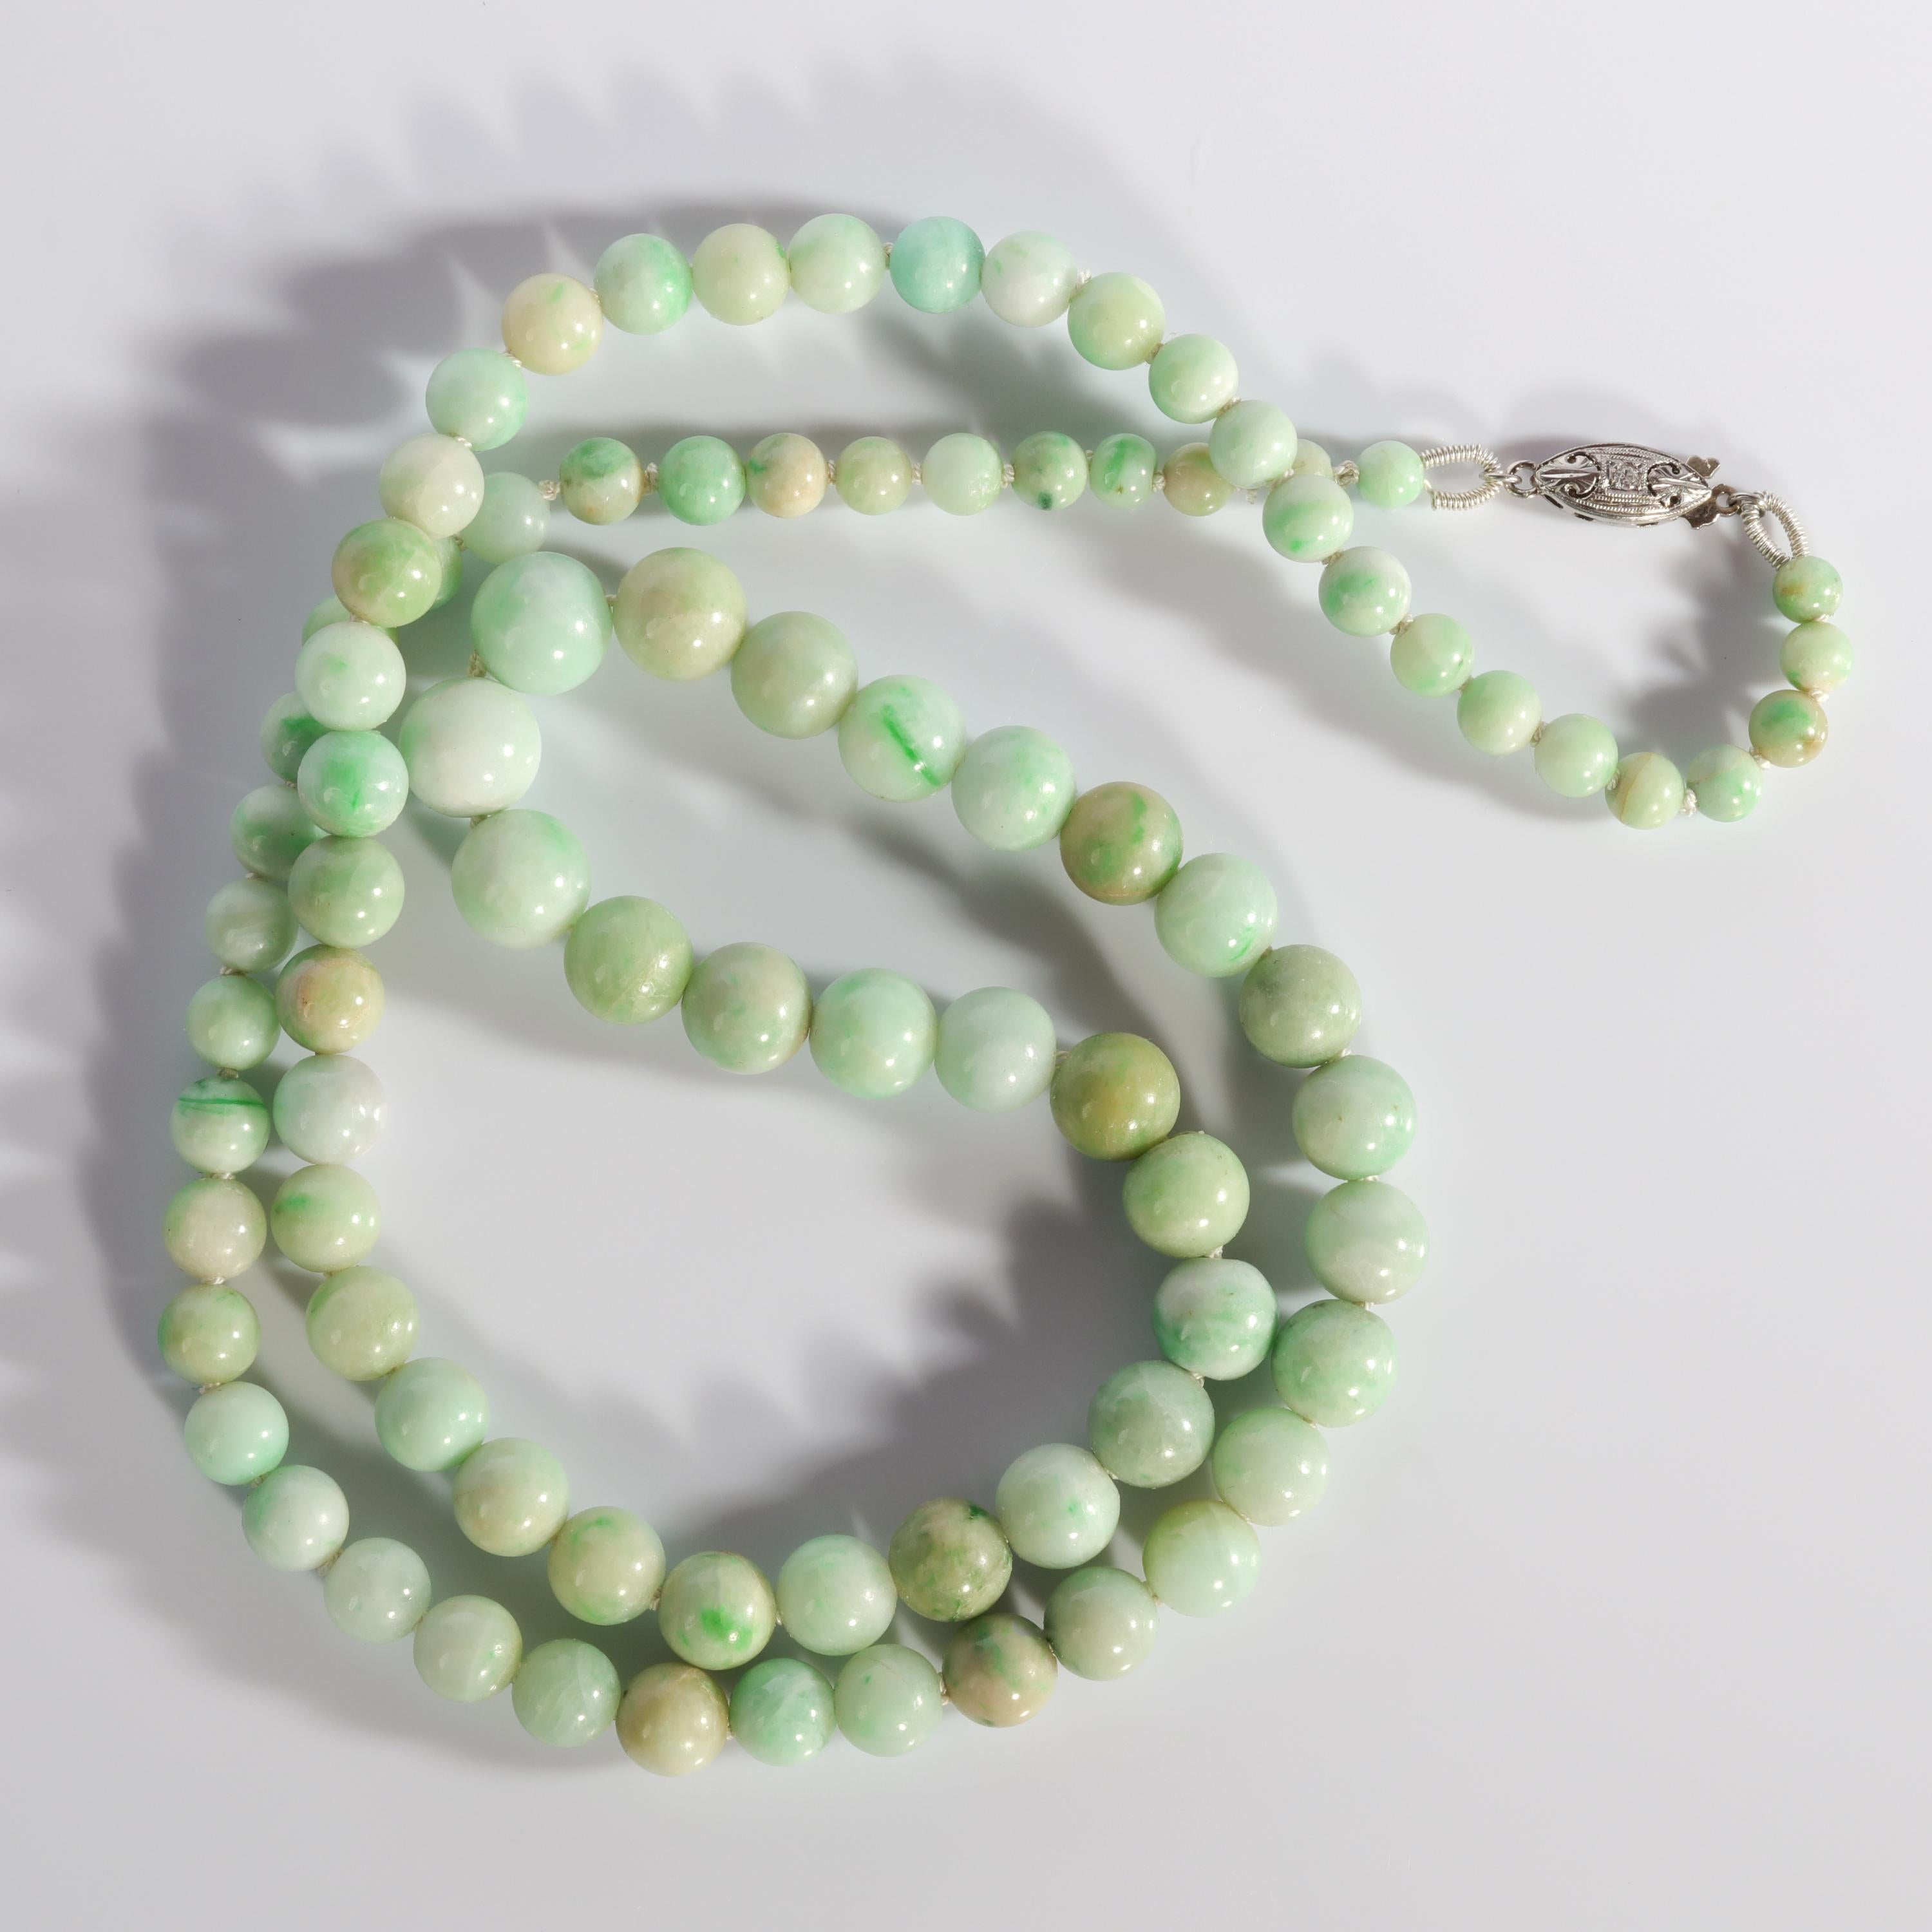 Art Deco Jadeite Jade Necklace in Soft Muted Tones Certified Untreated